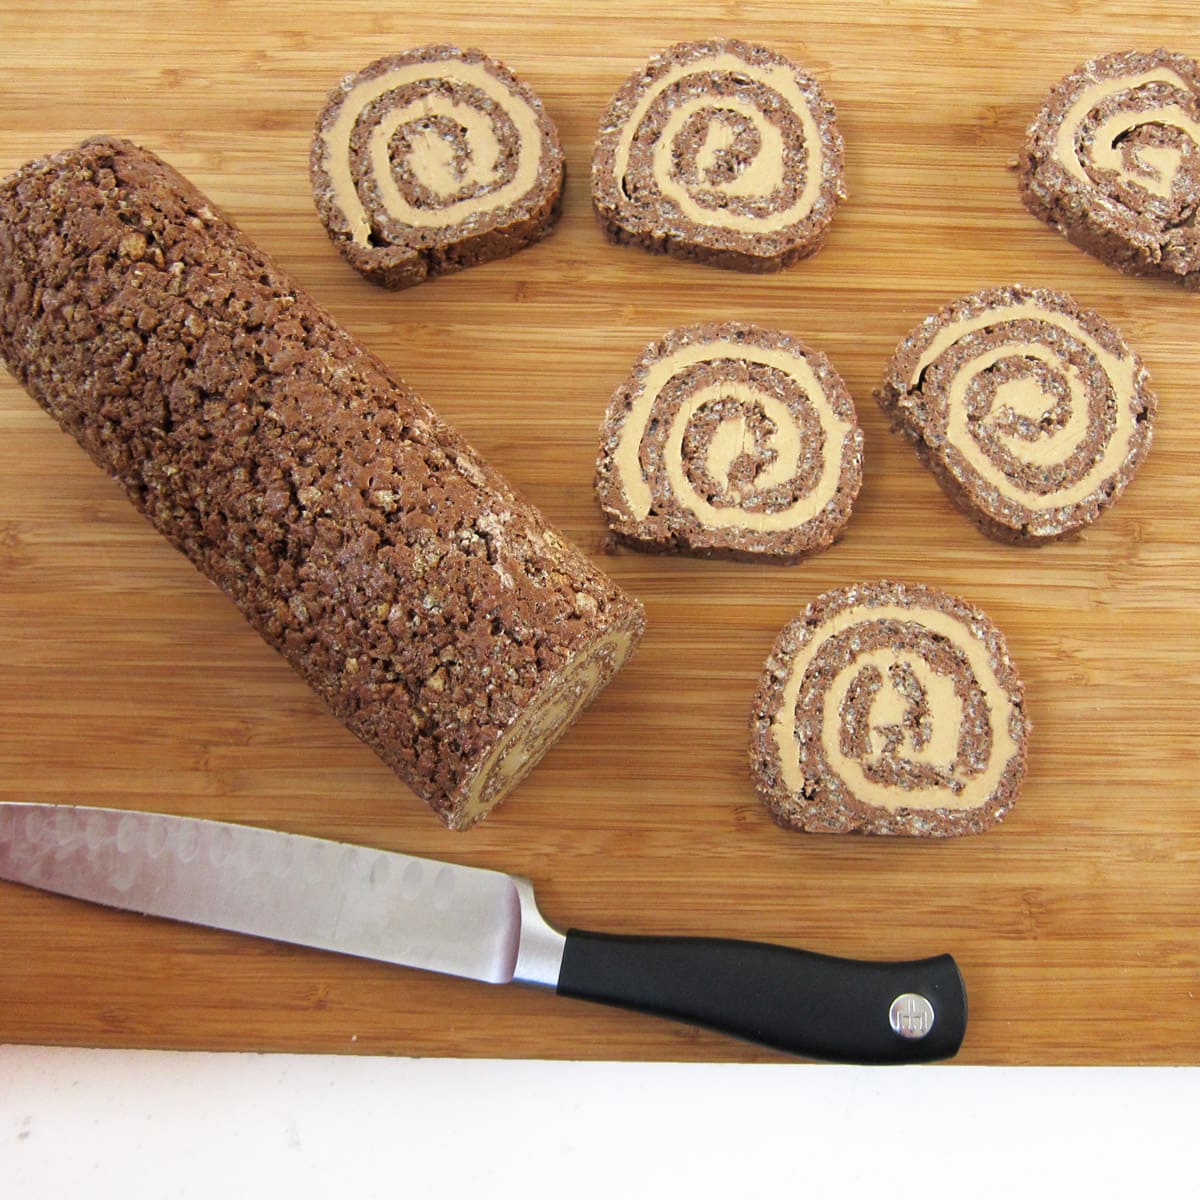 cutting chocolate peanut butter rice krispie treats into pinwheels.